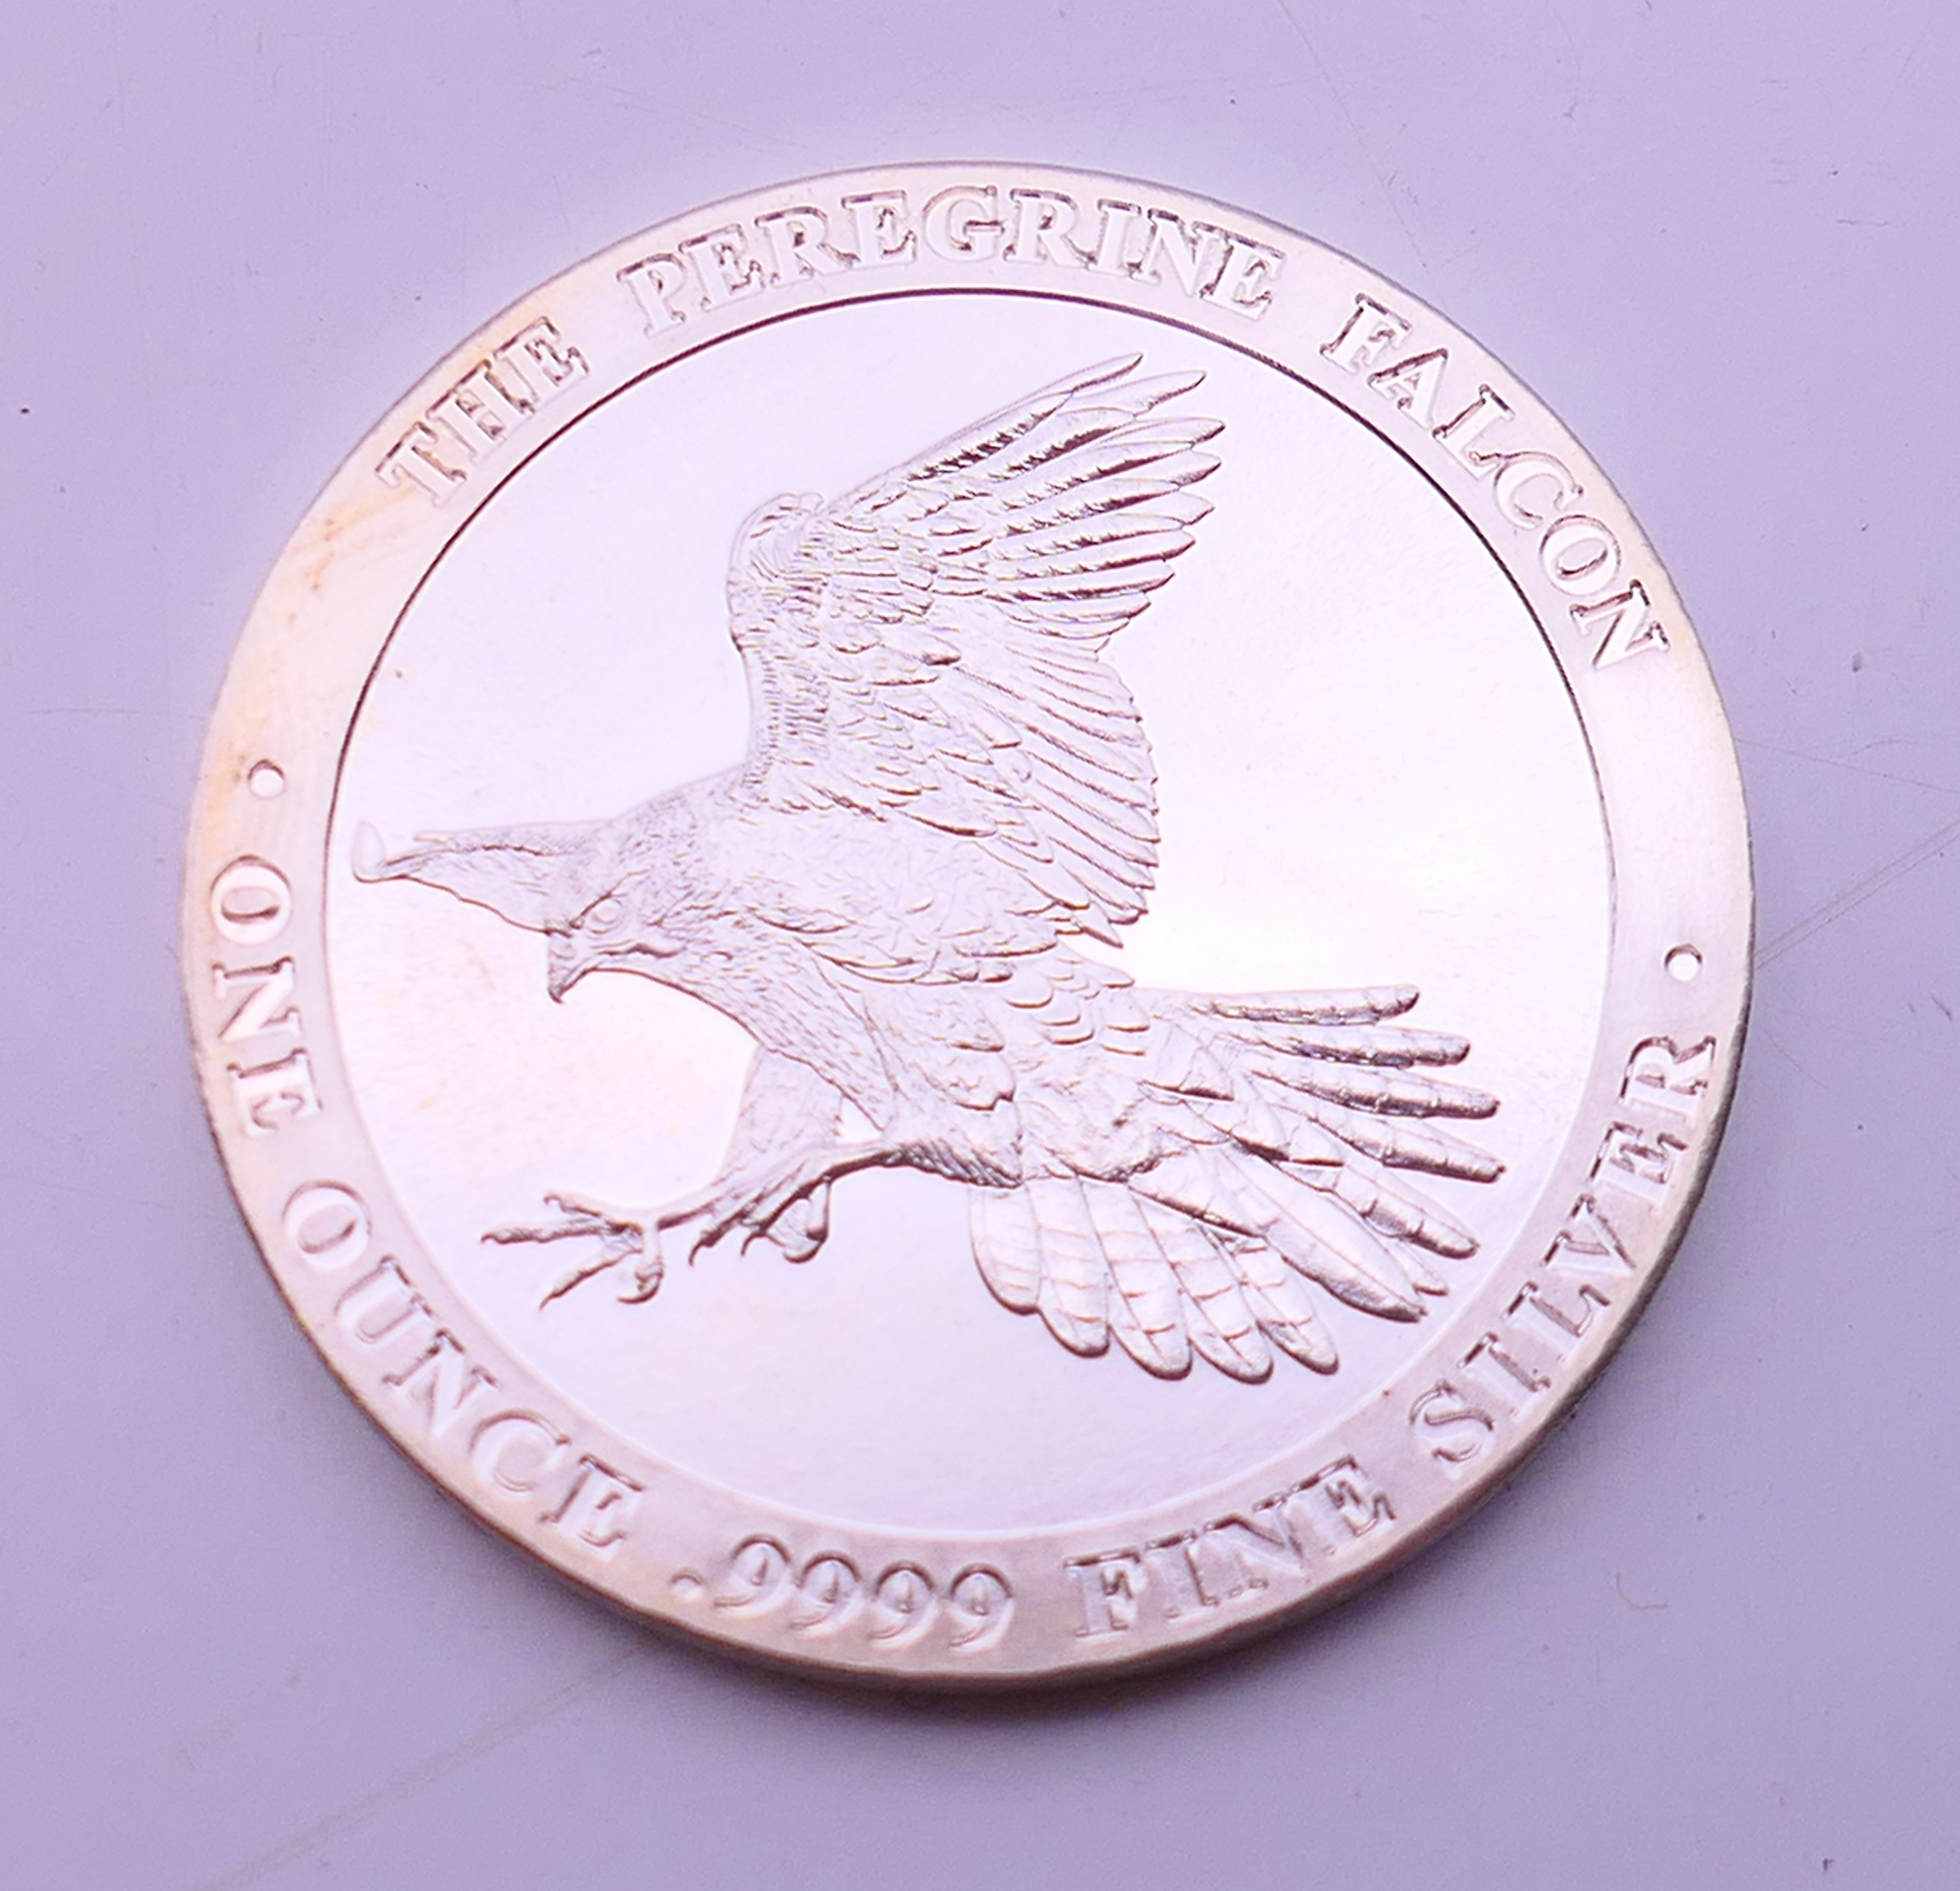 A .999 fine silver one ounce peregrine falcon coin. 4 cm diameter.